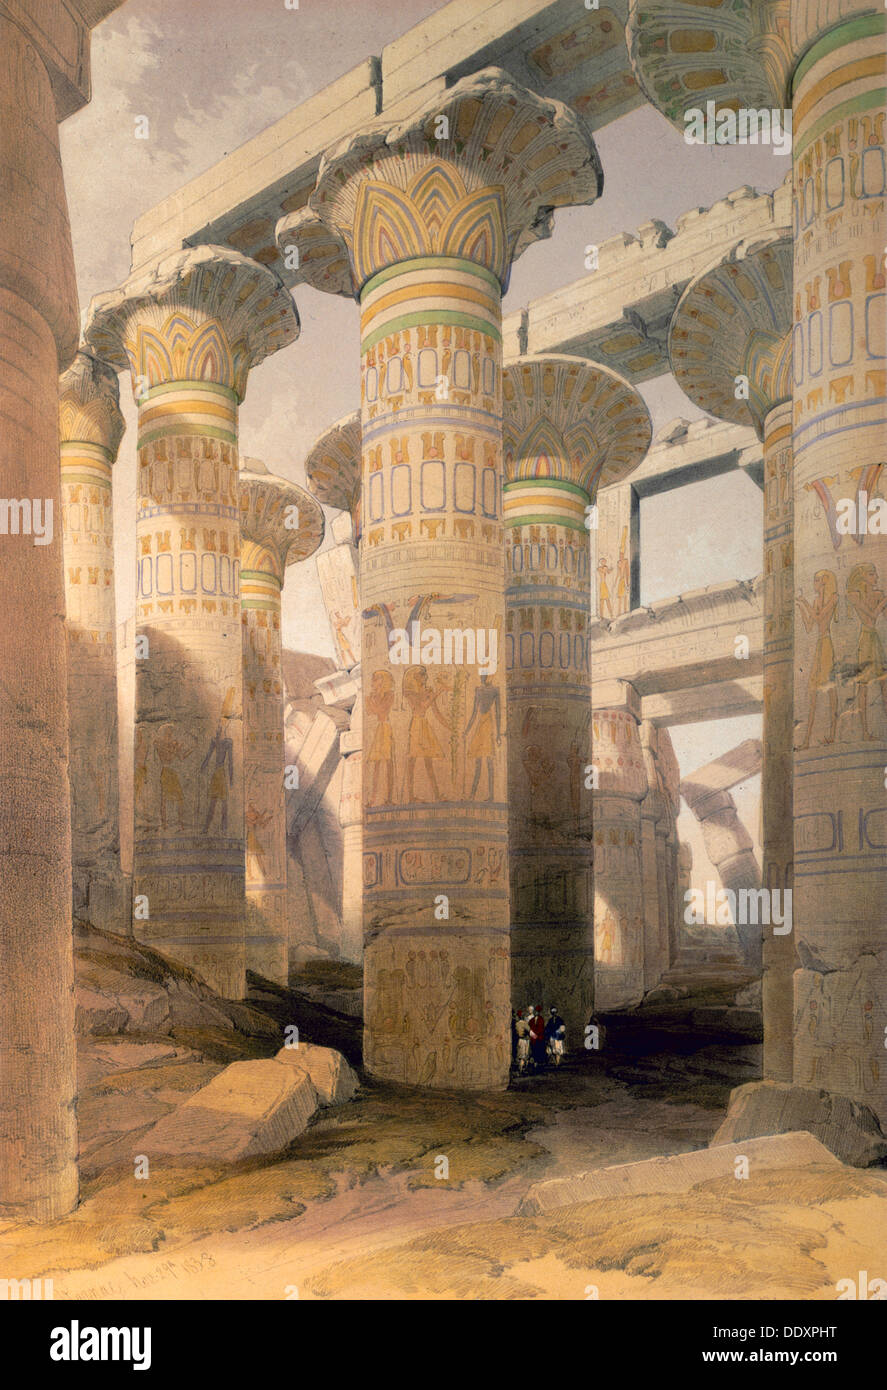 Hall of Columns, Karnak, Egypt, 19th century. Artist: David Roberts Stock Photo